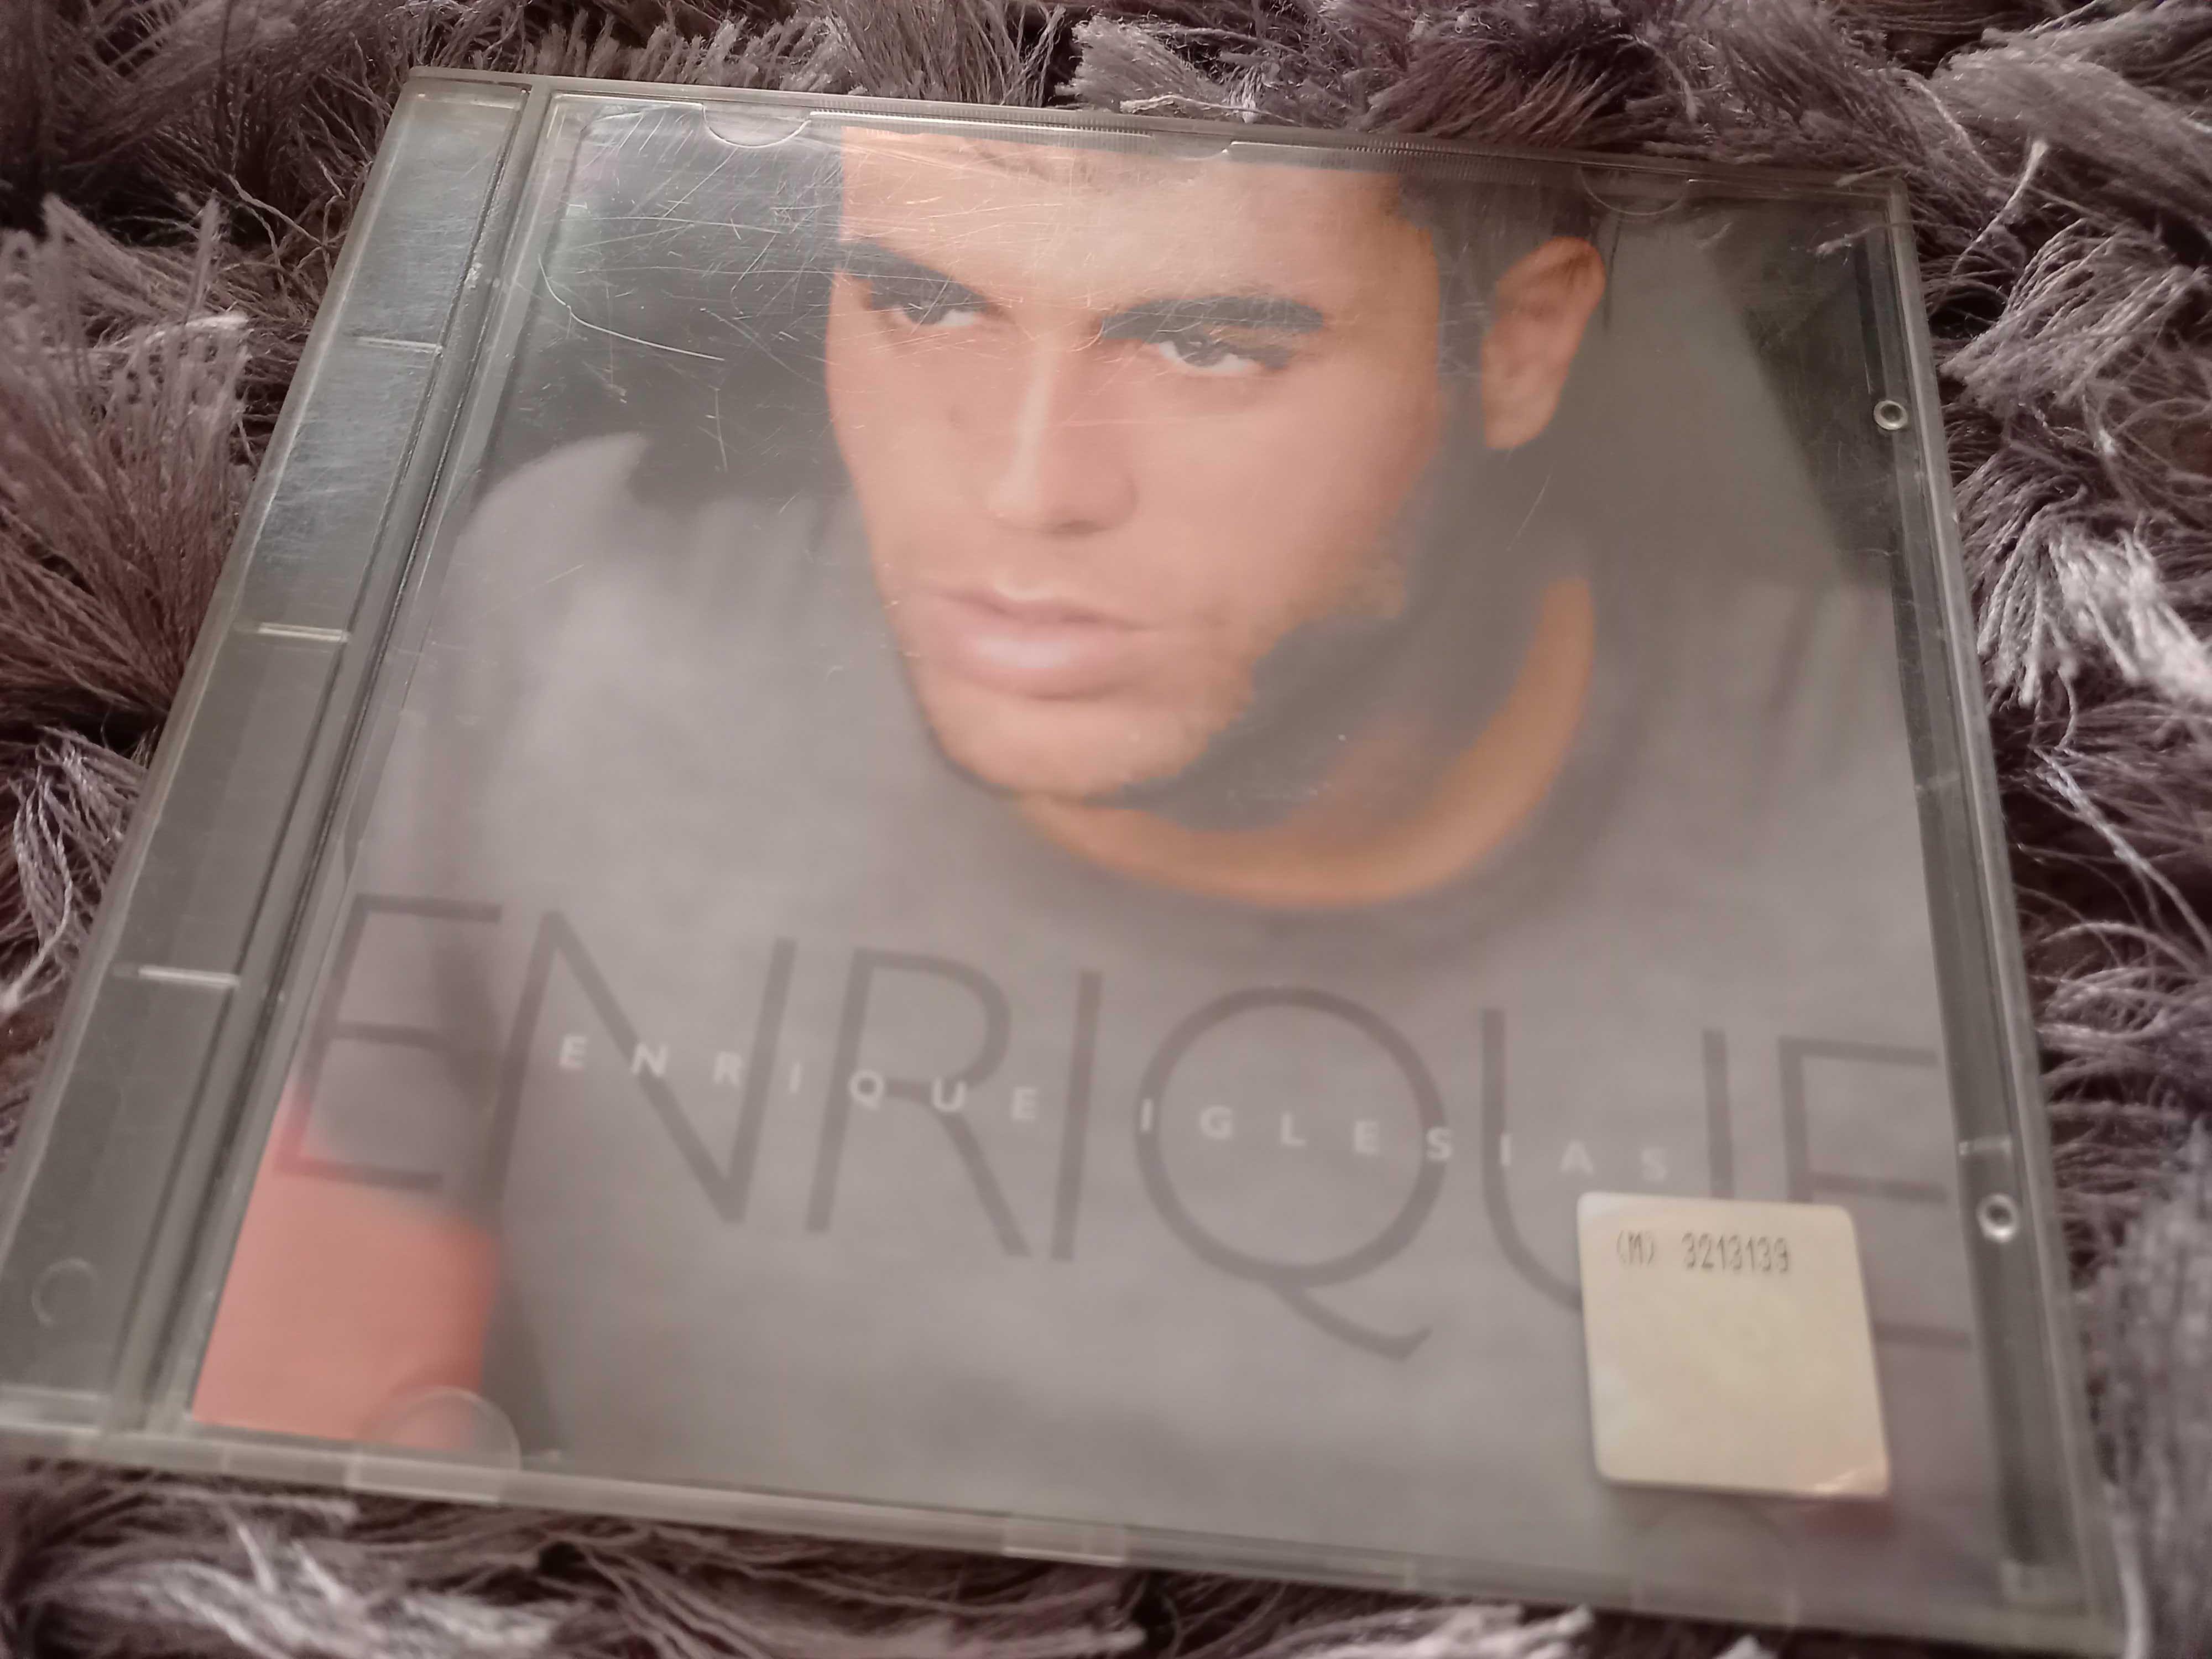 Sprzedam CD Enrique Iglesias